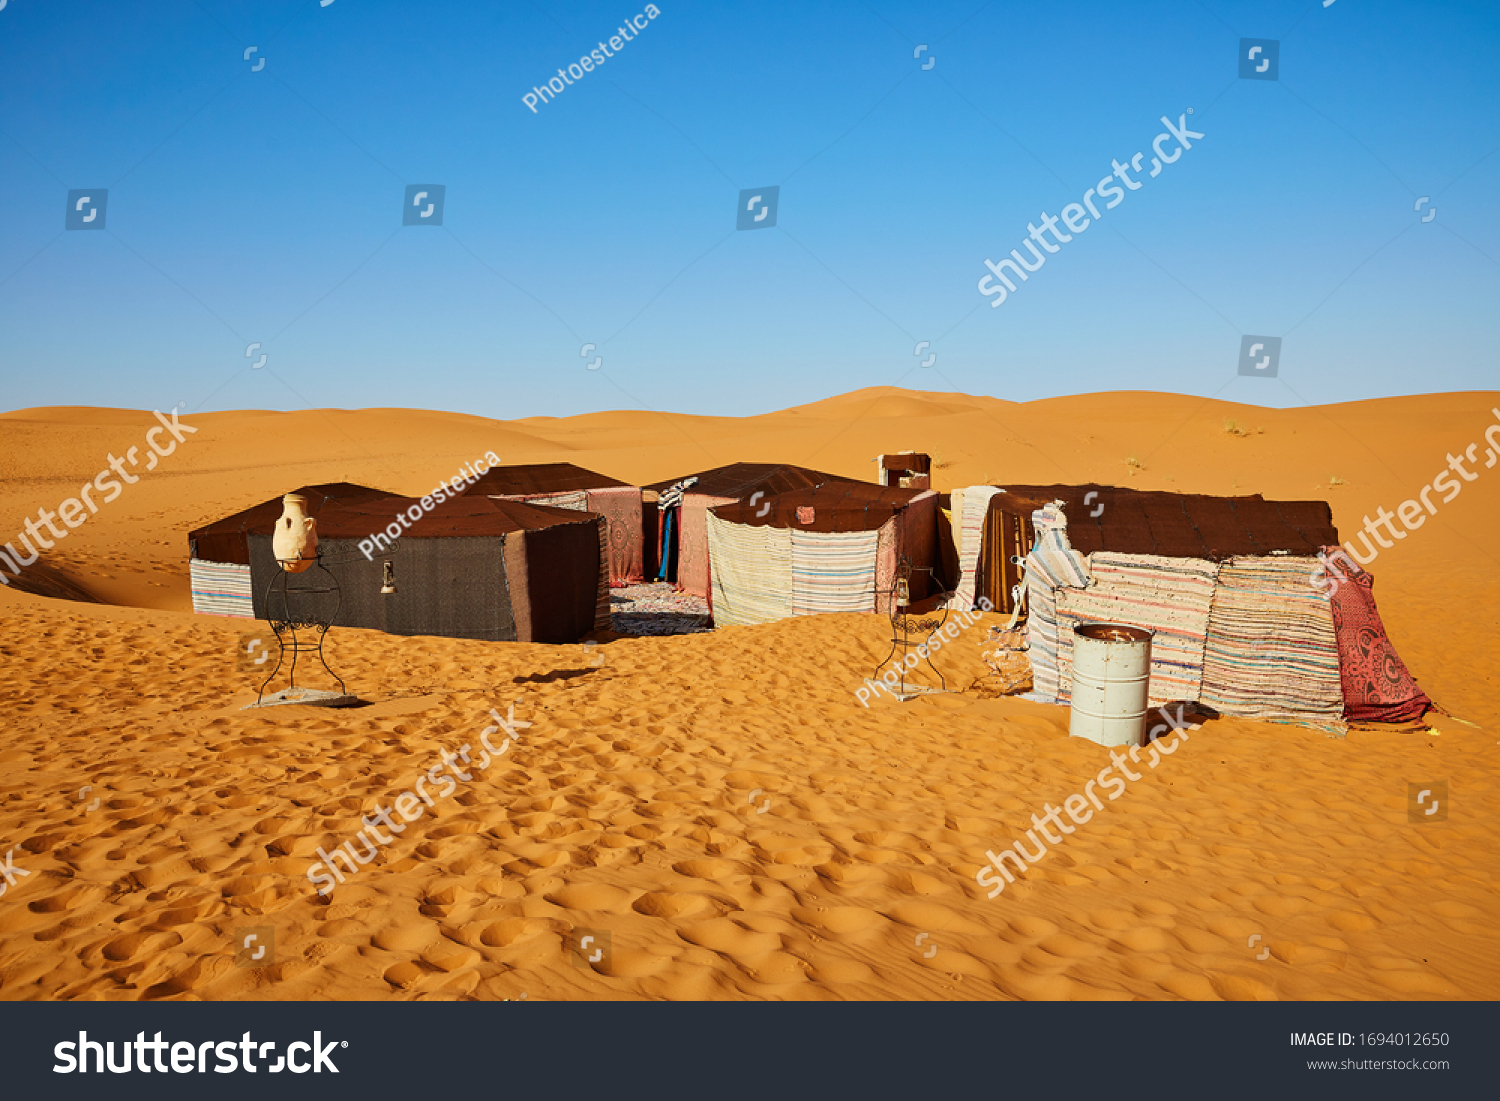 41 Camel Treck Images, Stock Photos & Vectors | Shutterstock